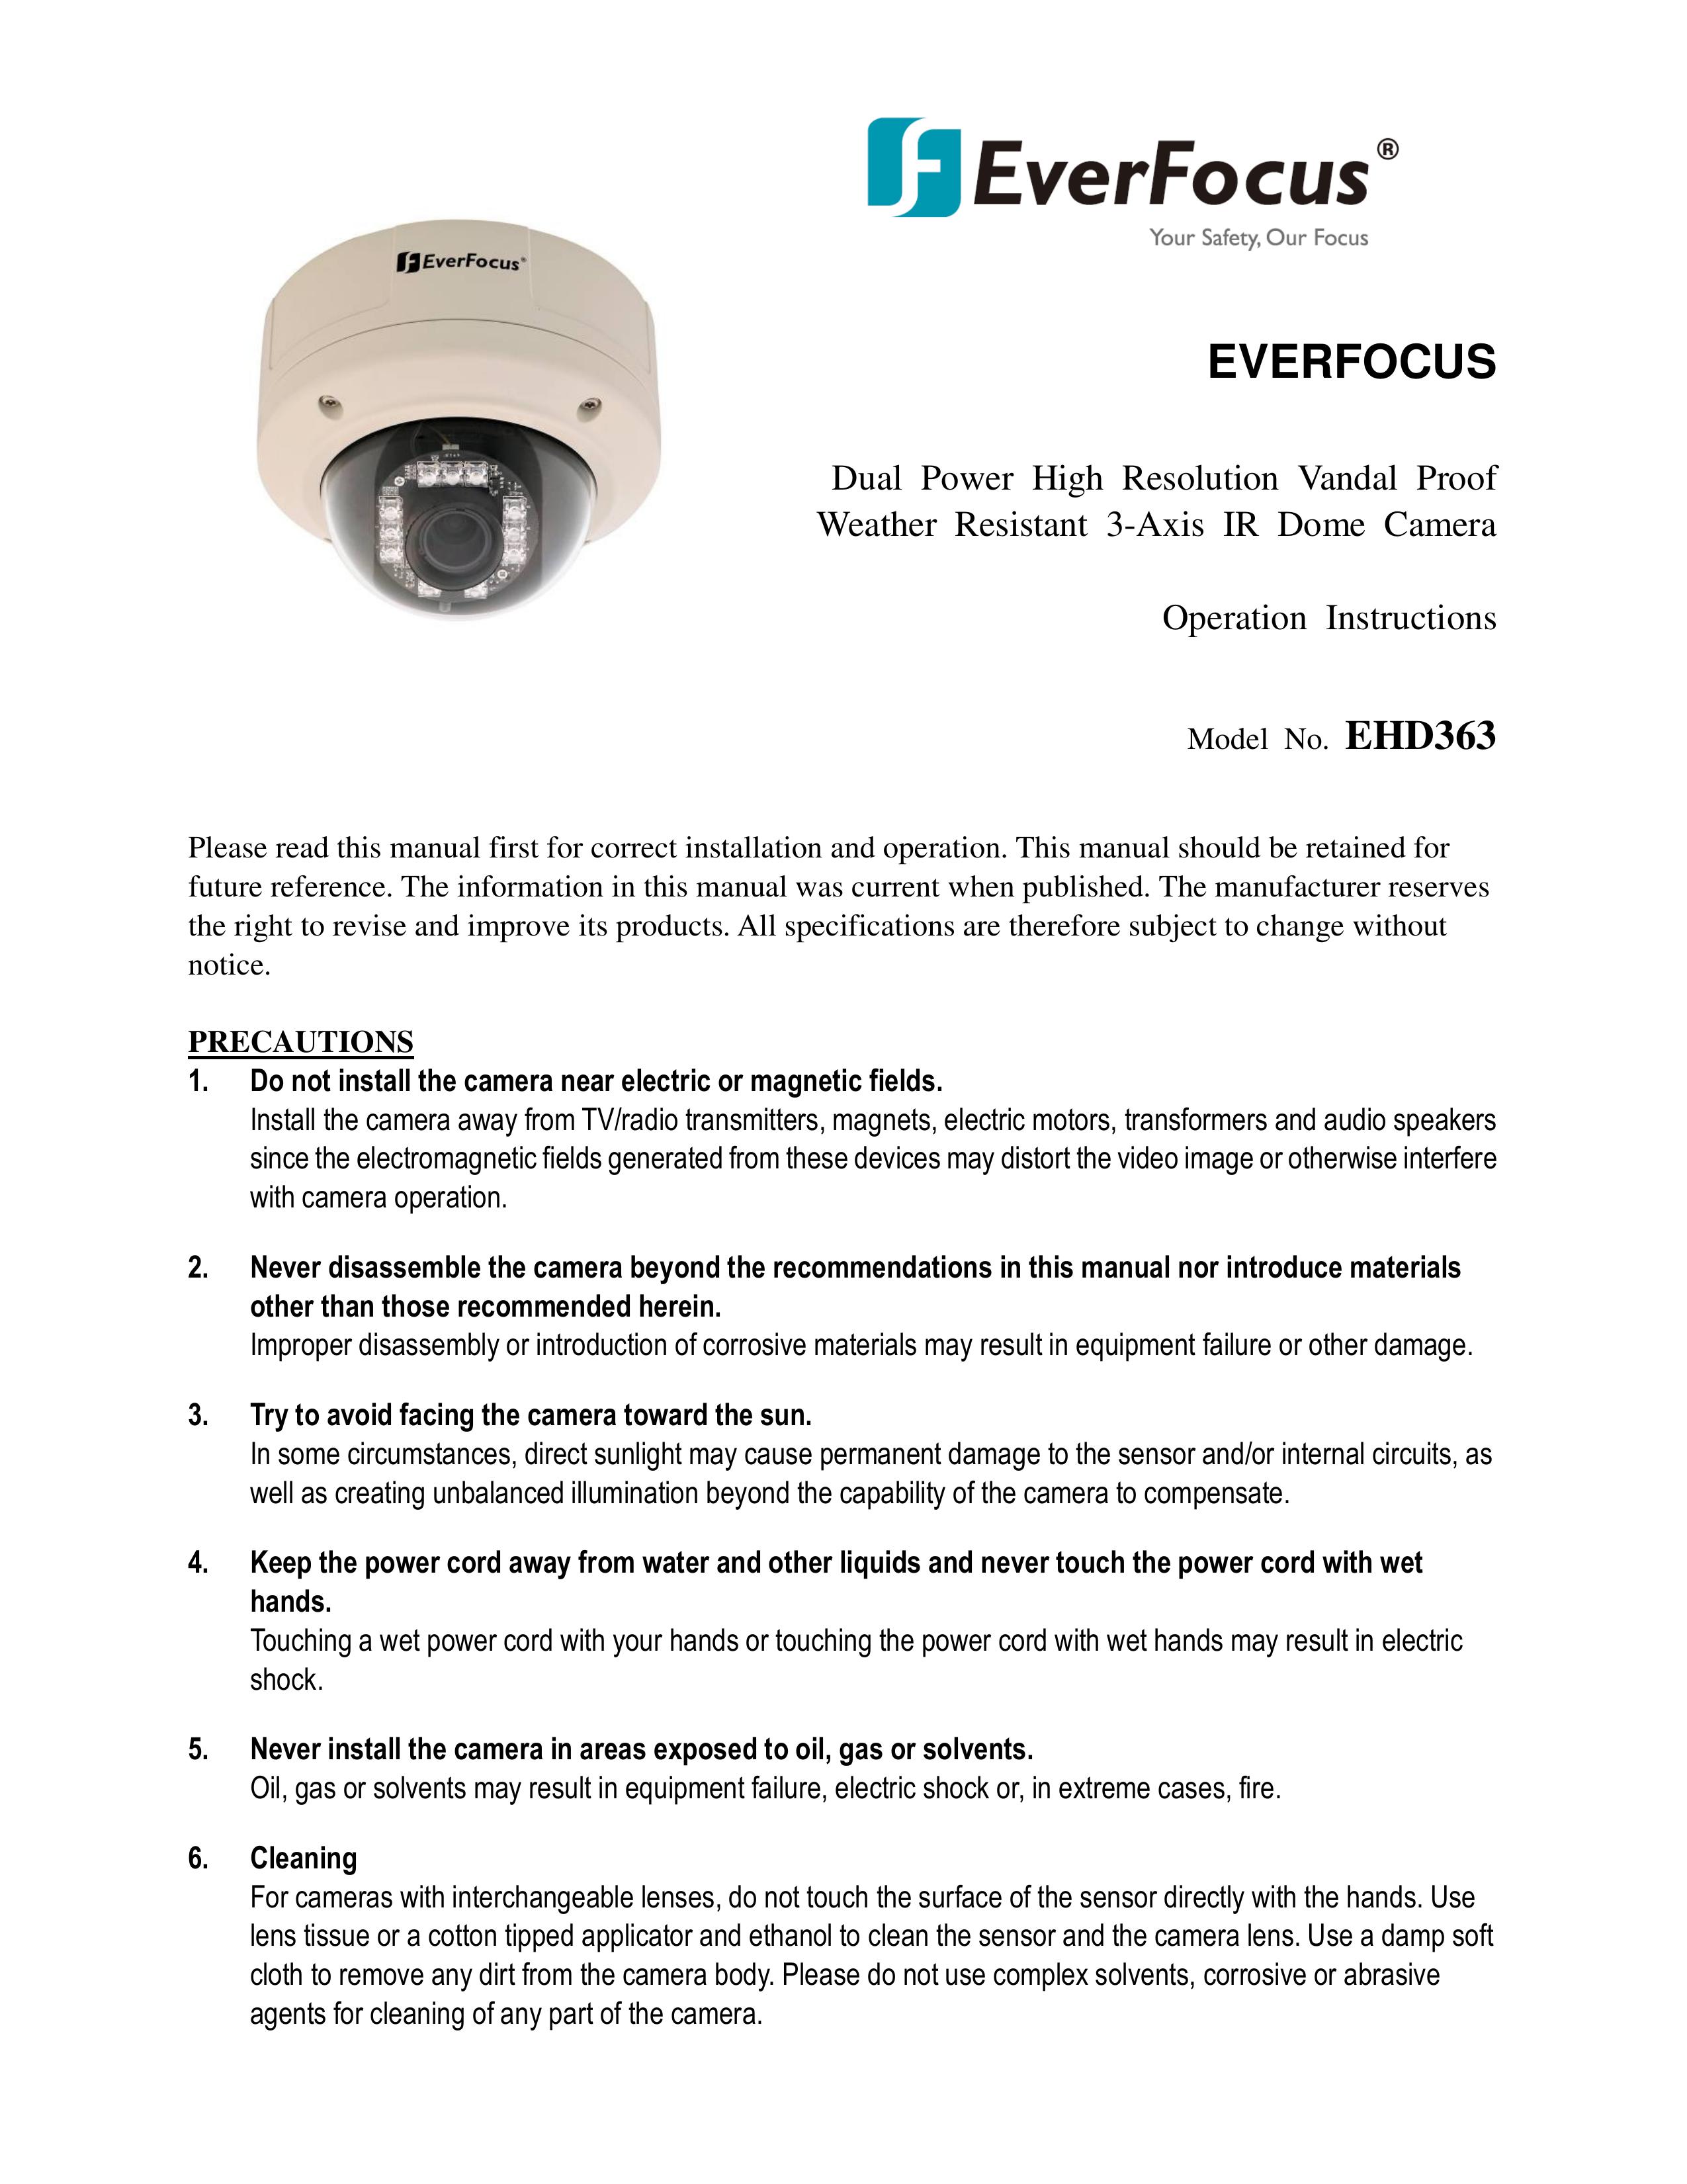 EverFocus EHD363 Security Camera User Manual